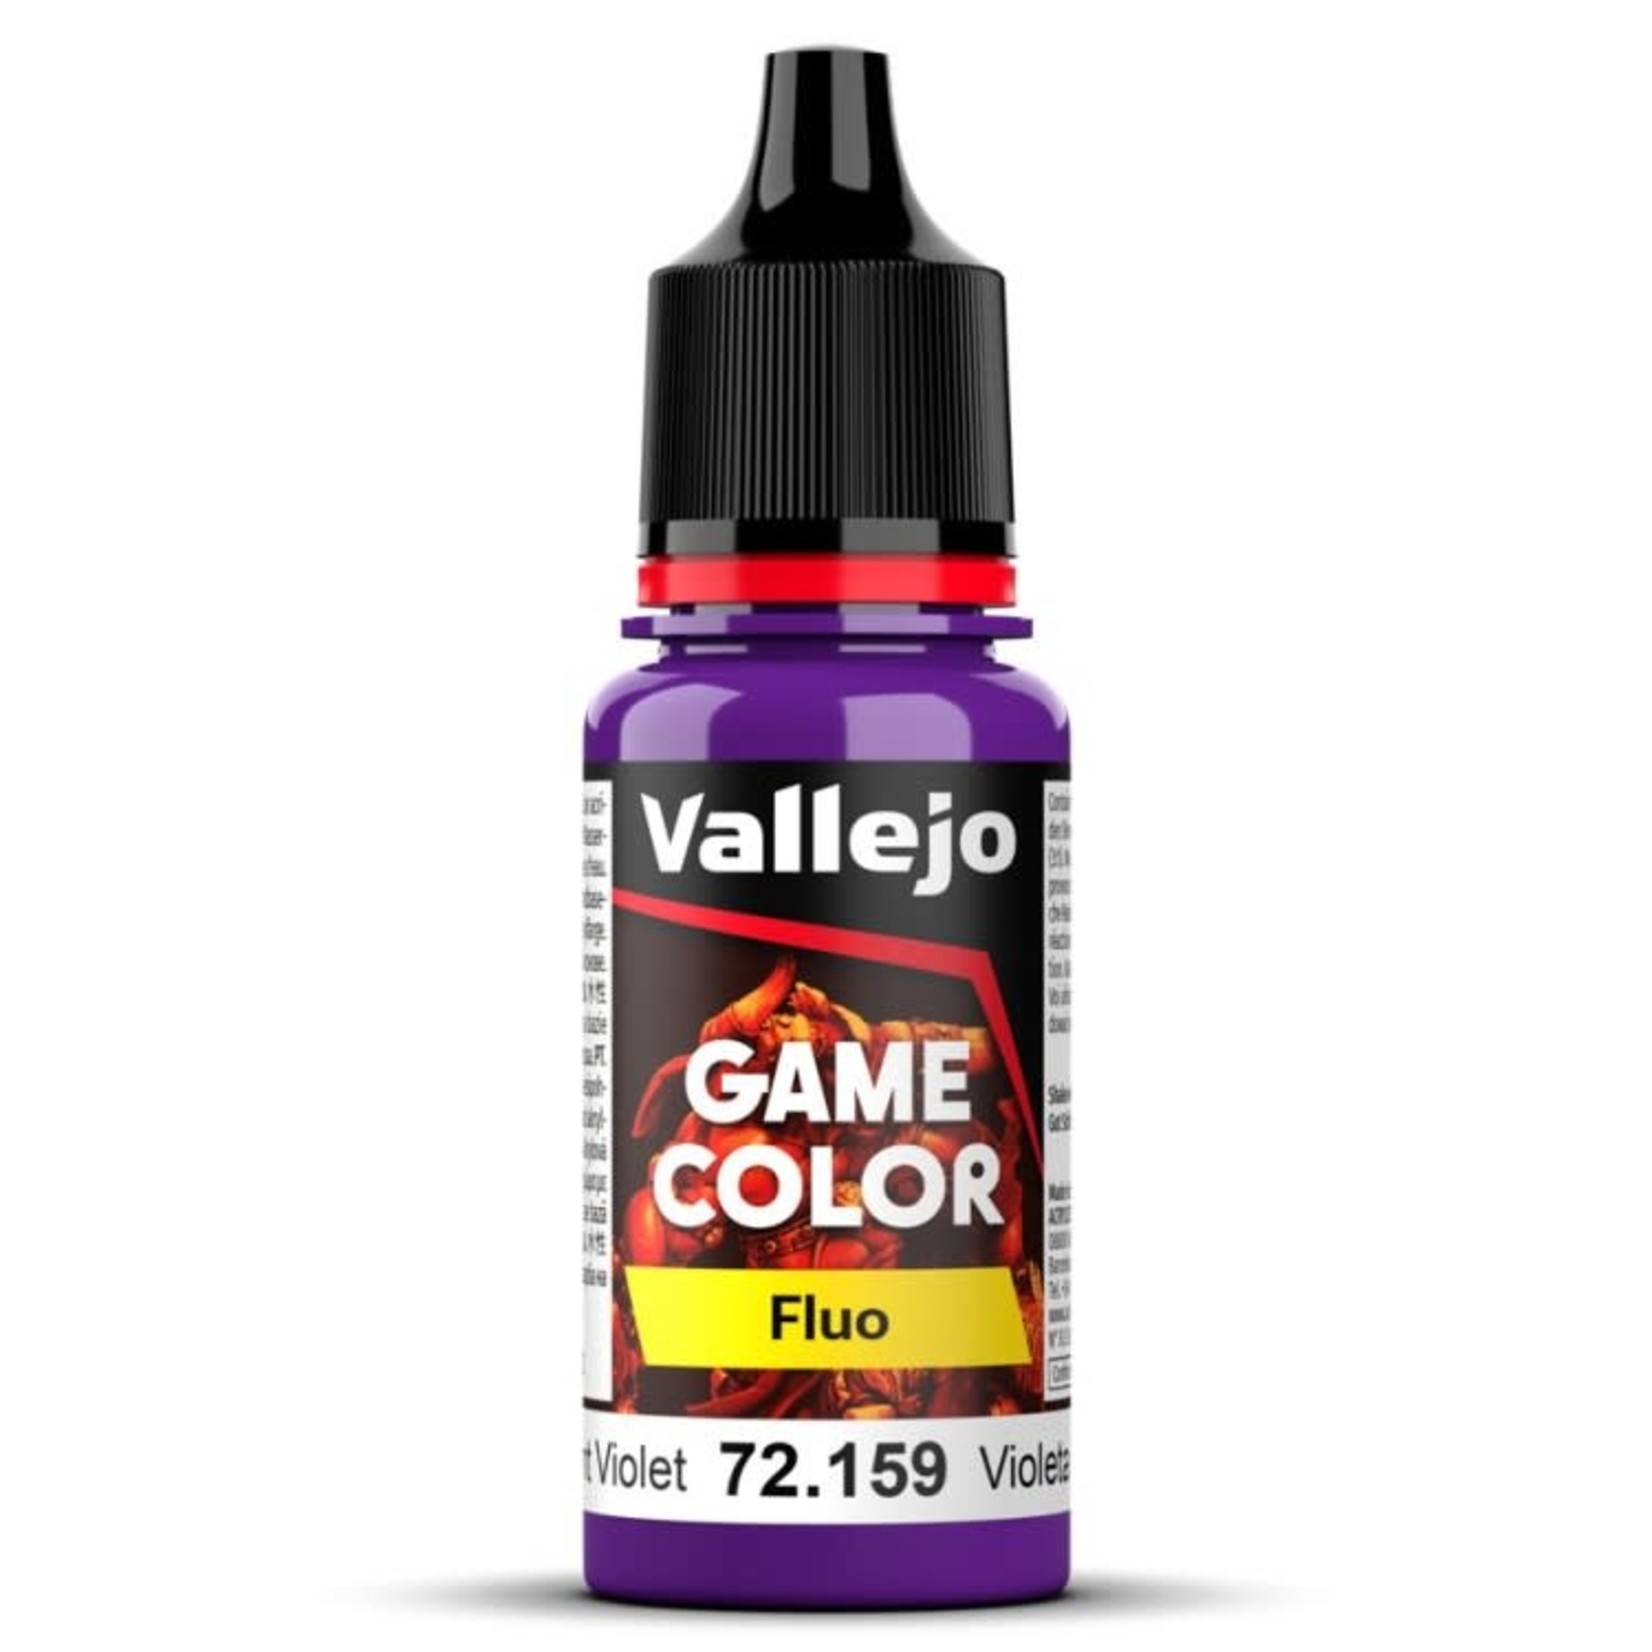 Vallejo Paint: Game Color, Fluo (Violet)